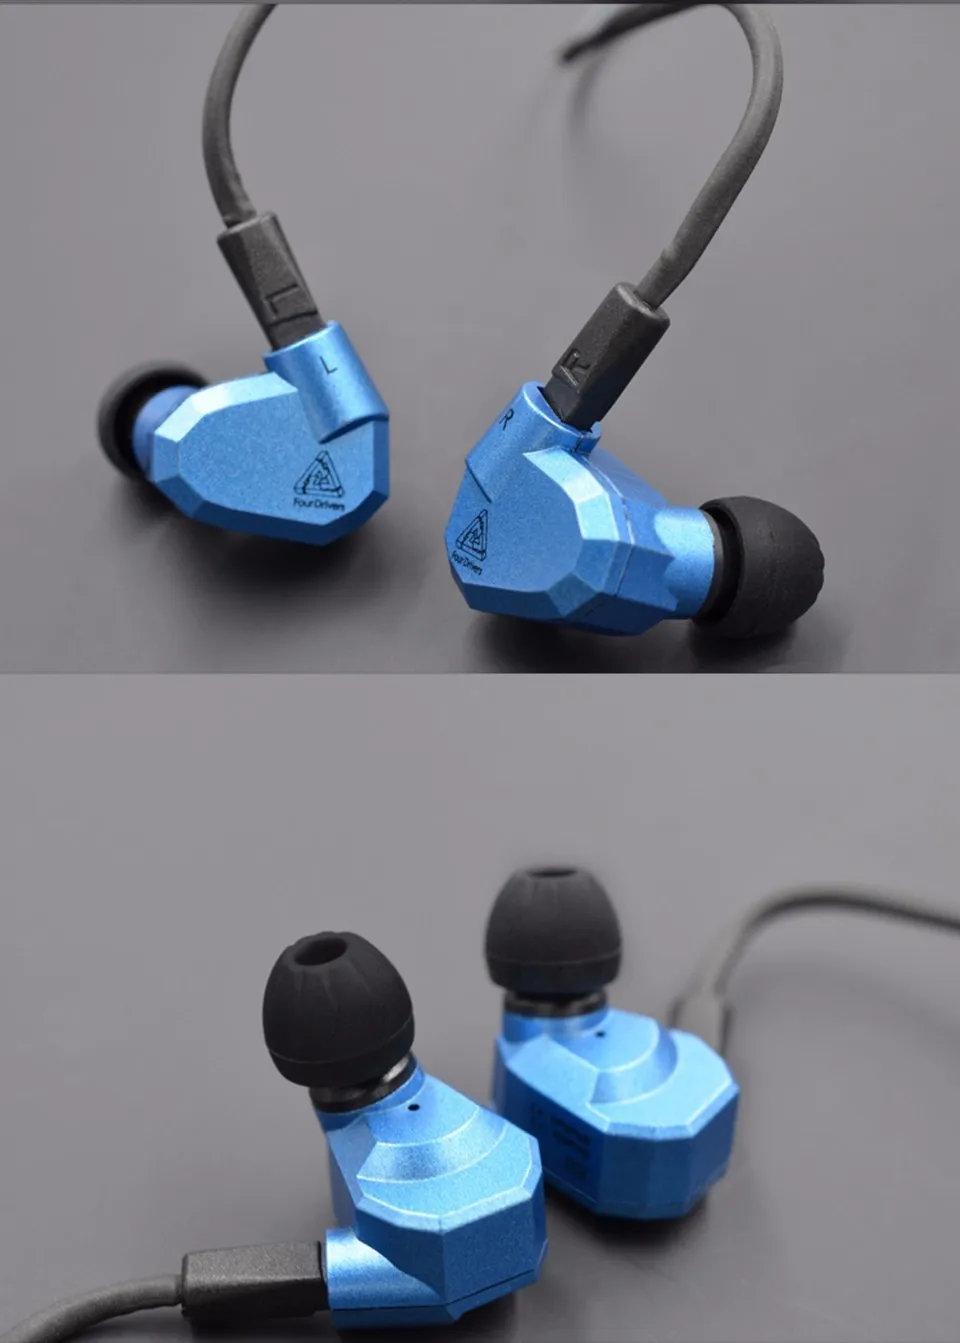 Kz zs5 hybrid earphones 2dd+2ba dynamic balanced armature sport earphones noise isolating in ear headset hifi music earbuds